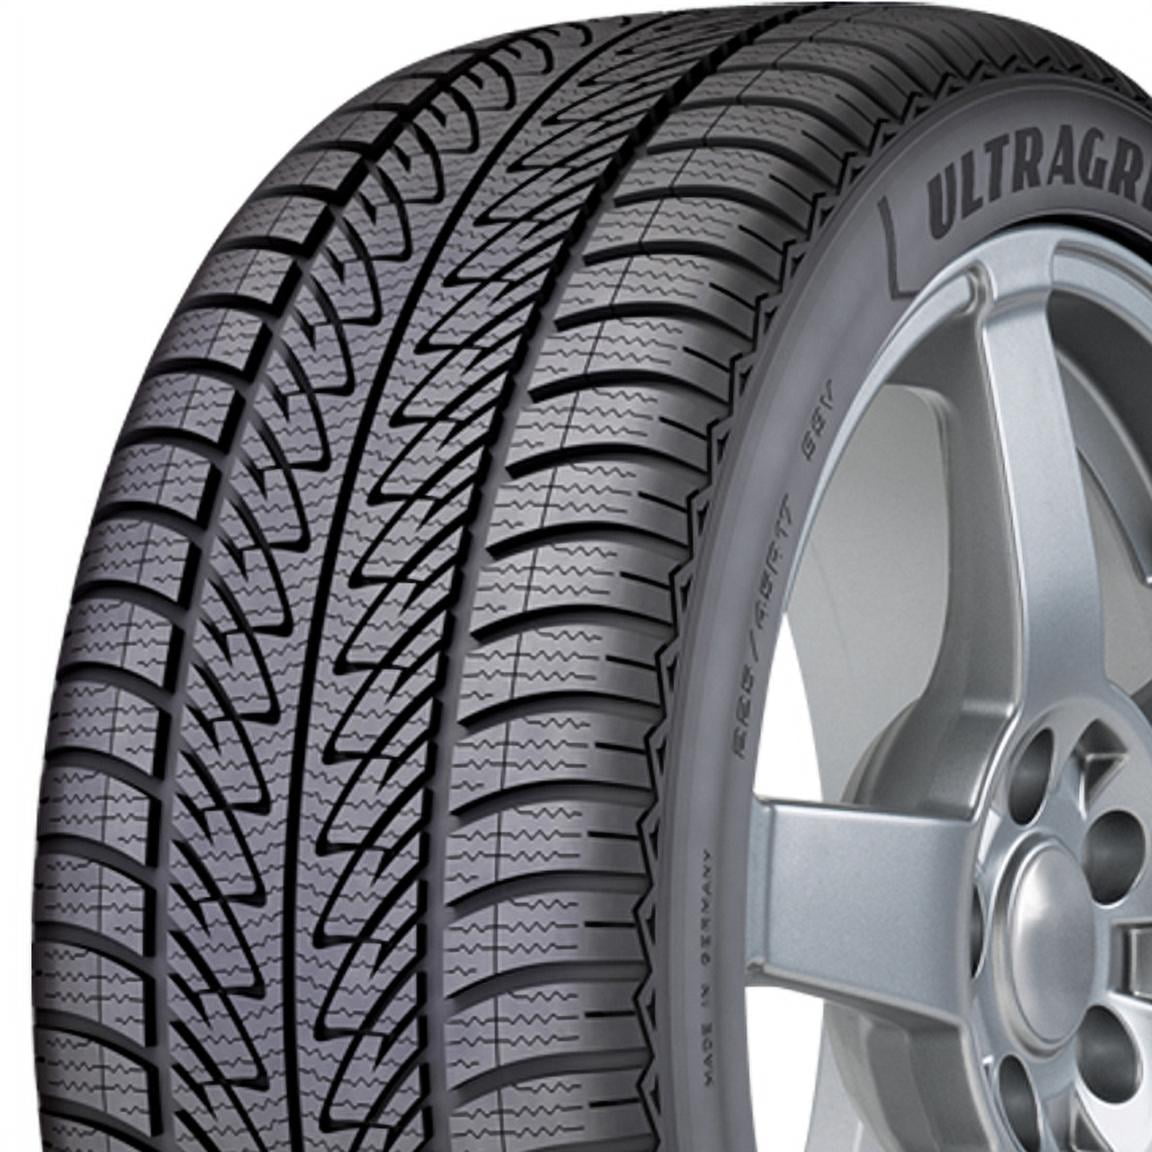 Goodyear ultra grip 8 SL SE-R, Sentra P195/55R16 Fits: Versa Nissan tire Nissan 2003-06 1.8 bsw performance winter 87H 2012